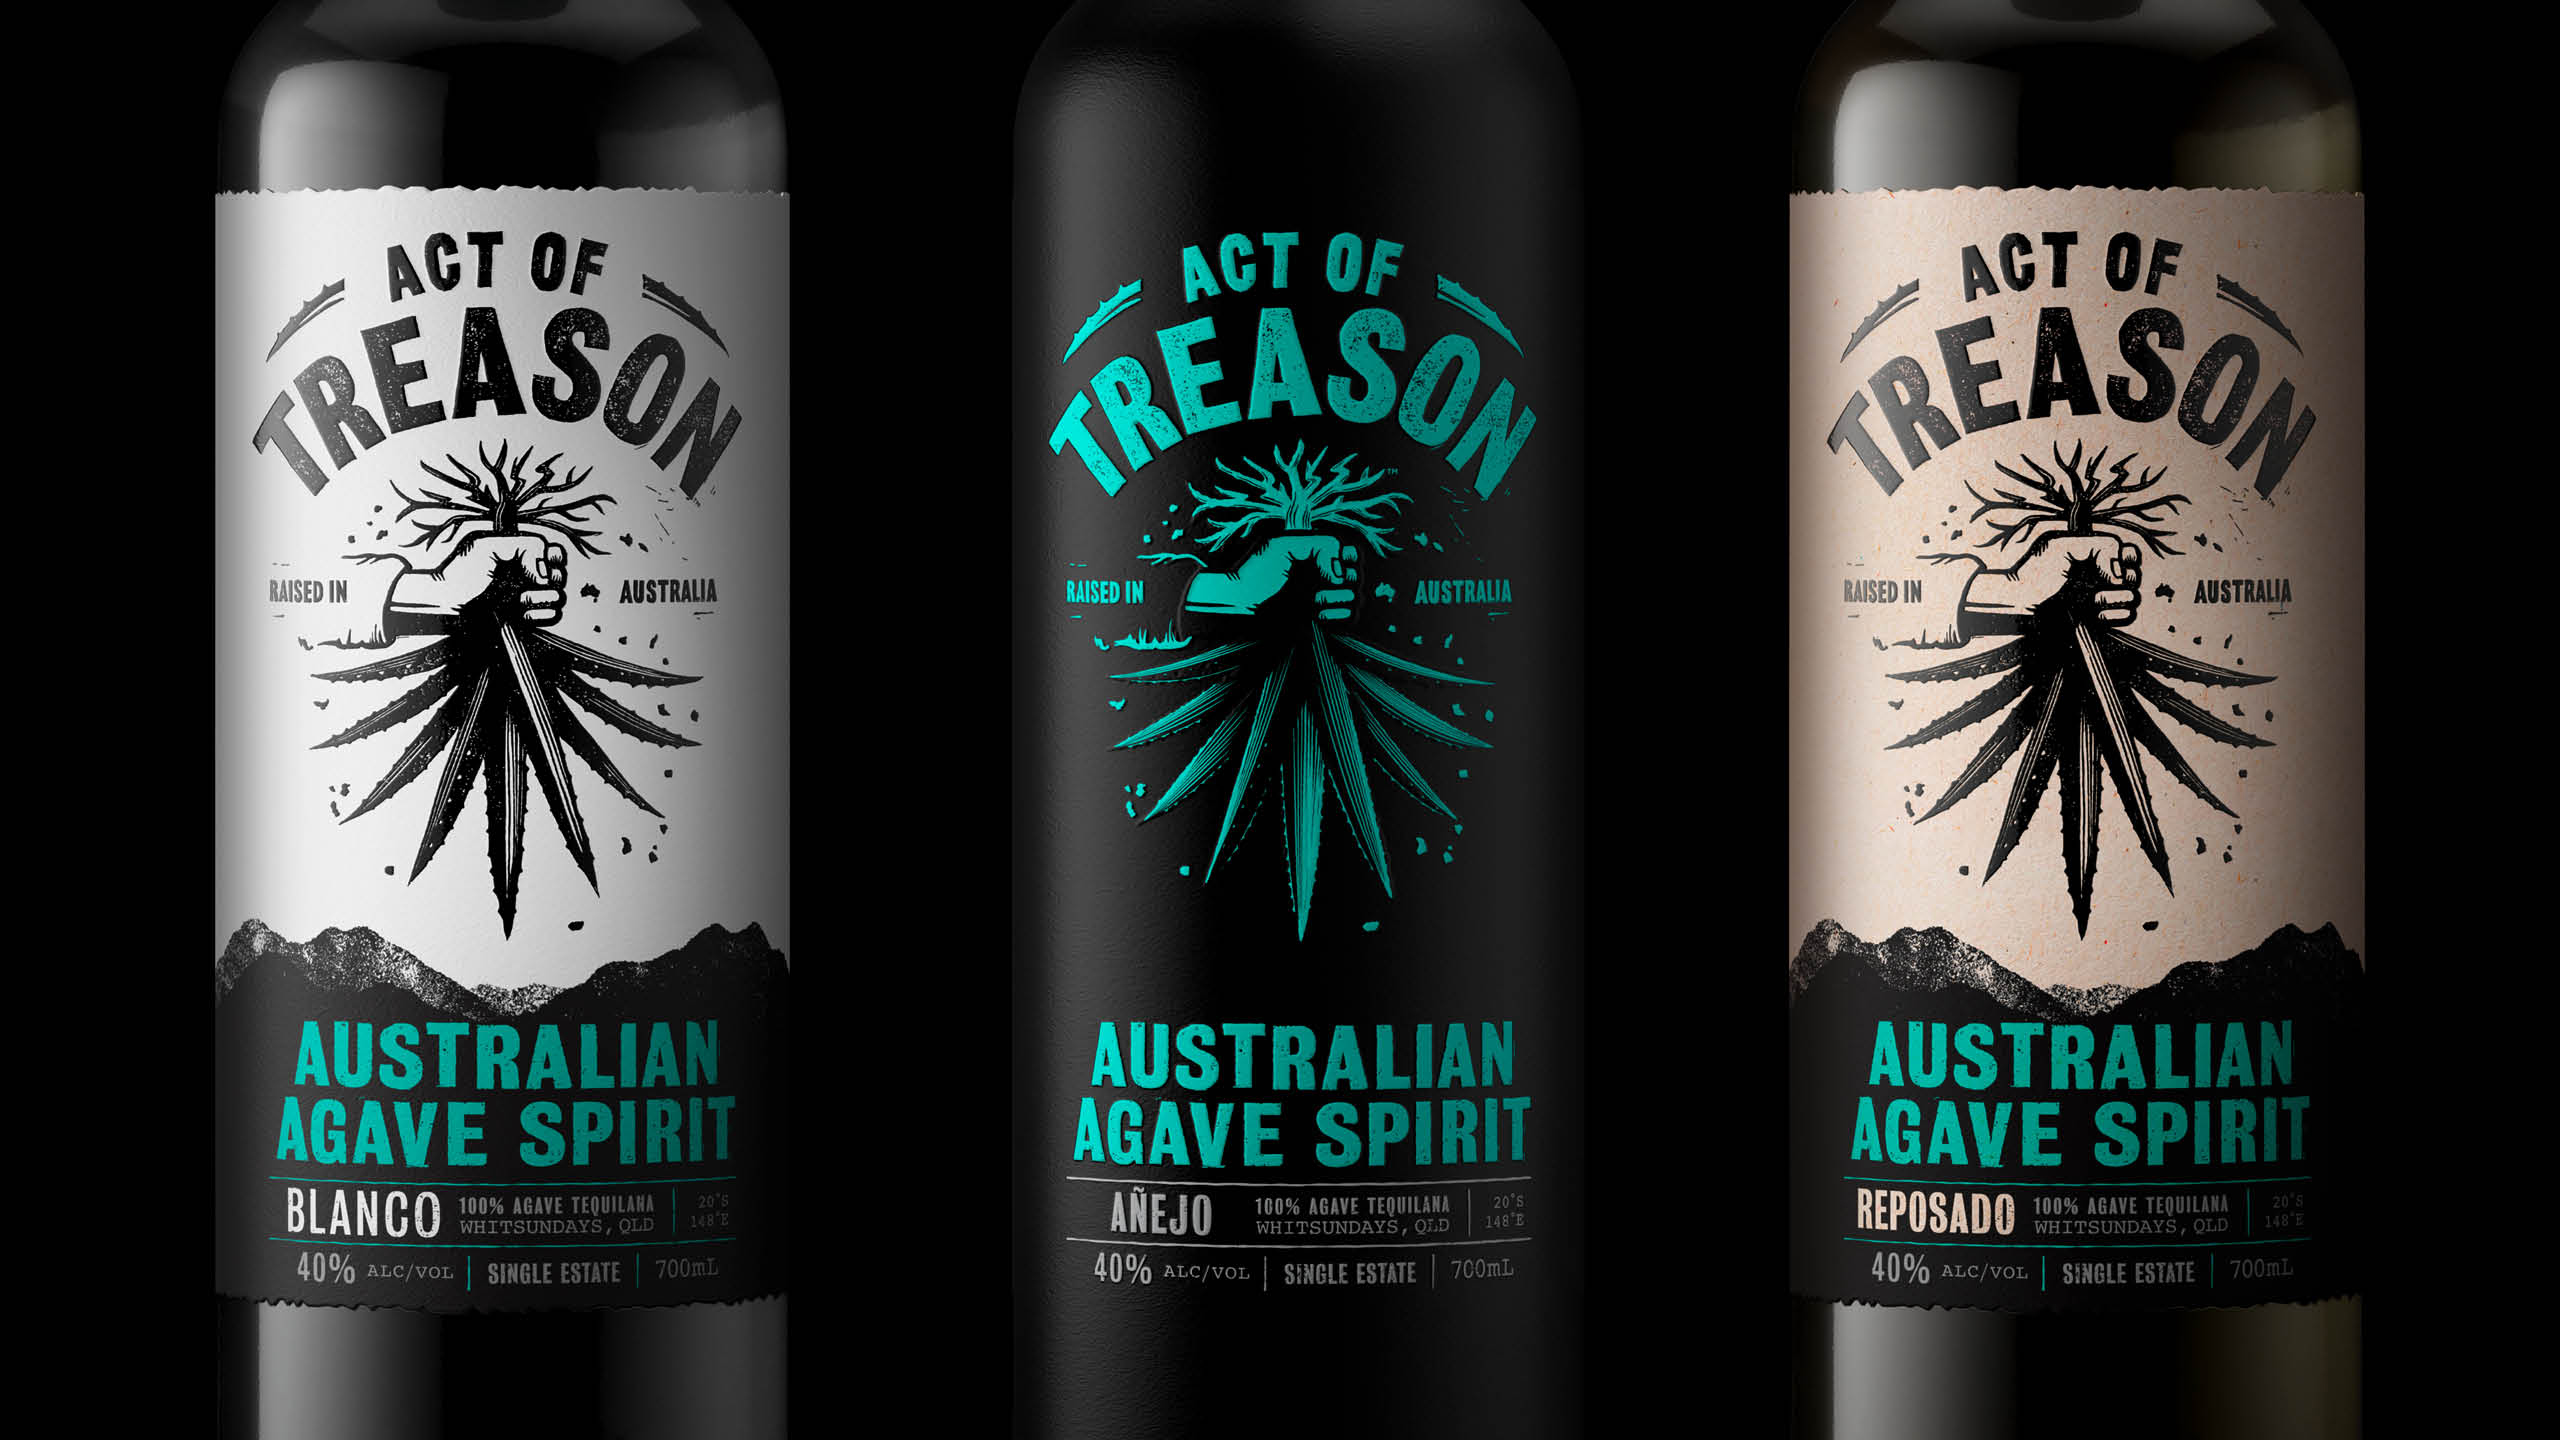 Act of Treason Australian Agave Spirit by Red Dot Studio Ltd